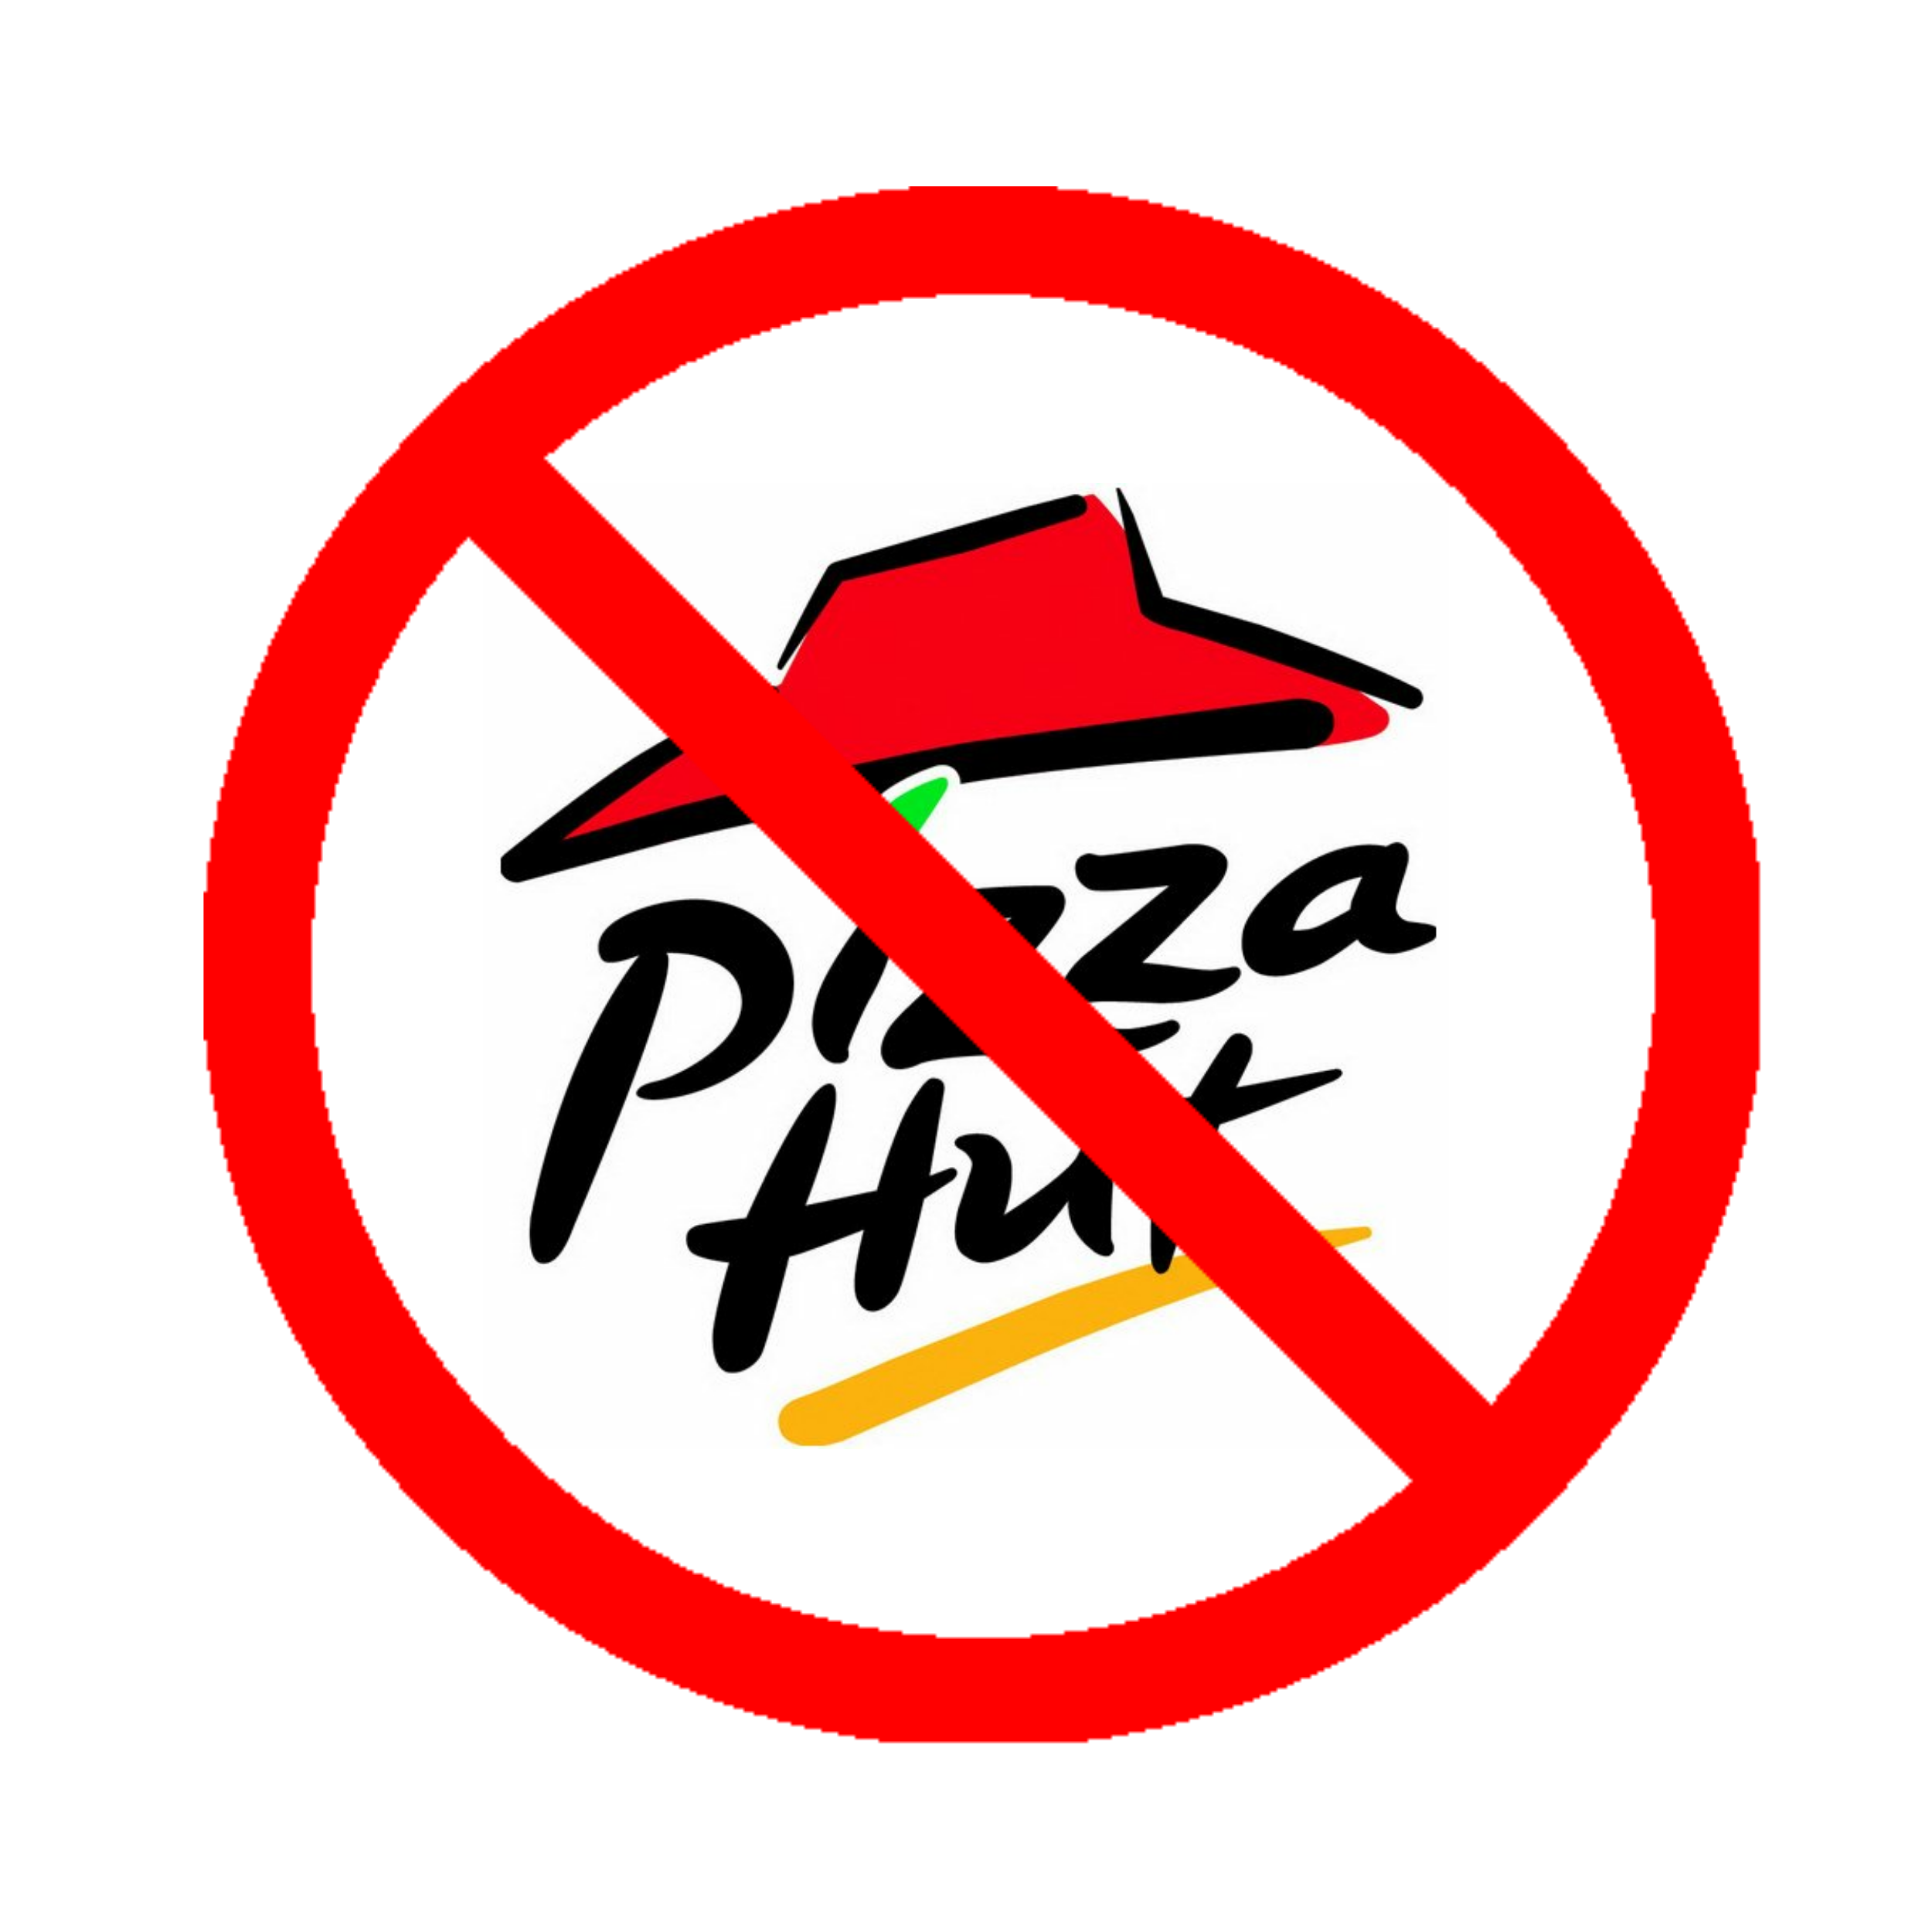 pizzagate (2)